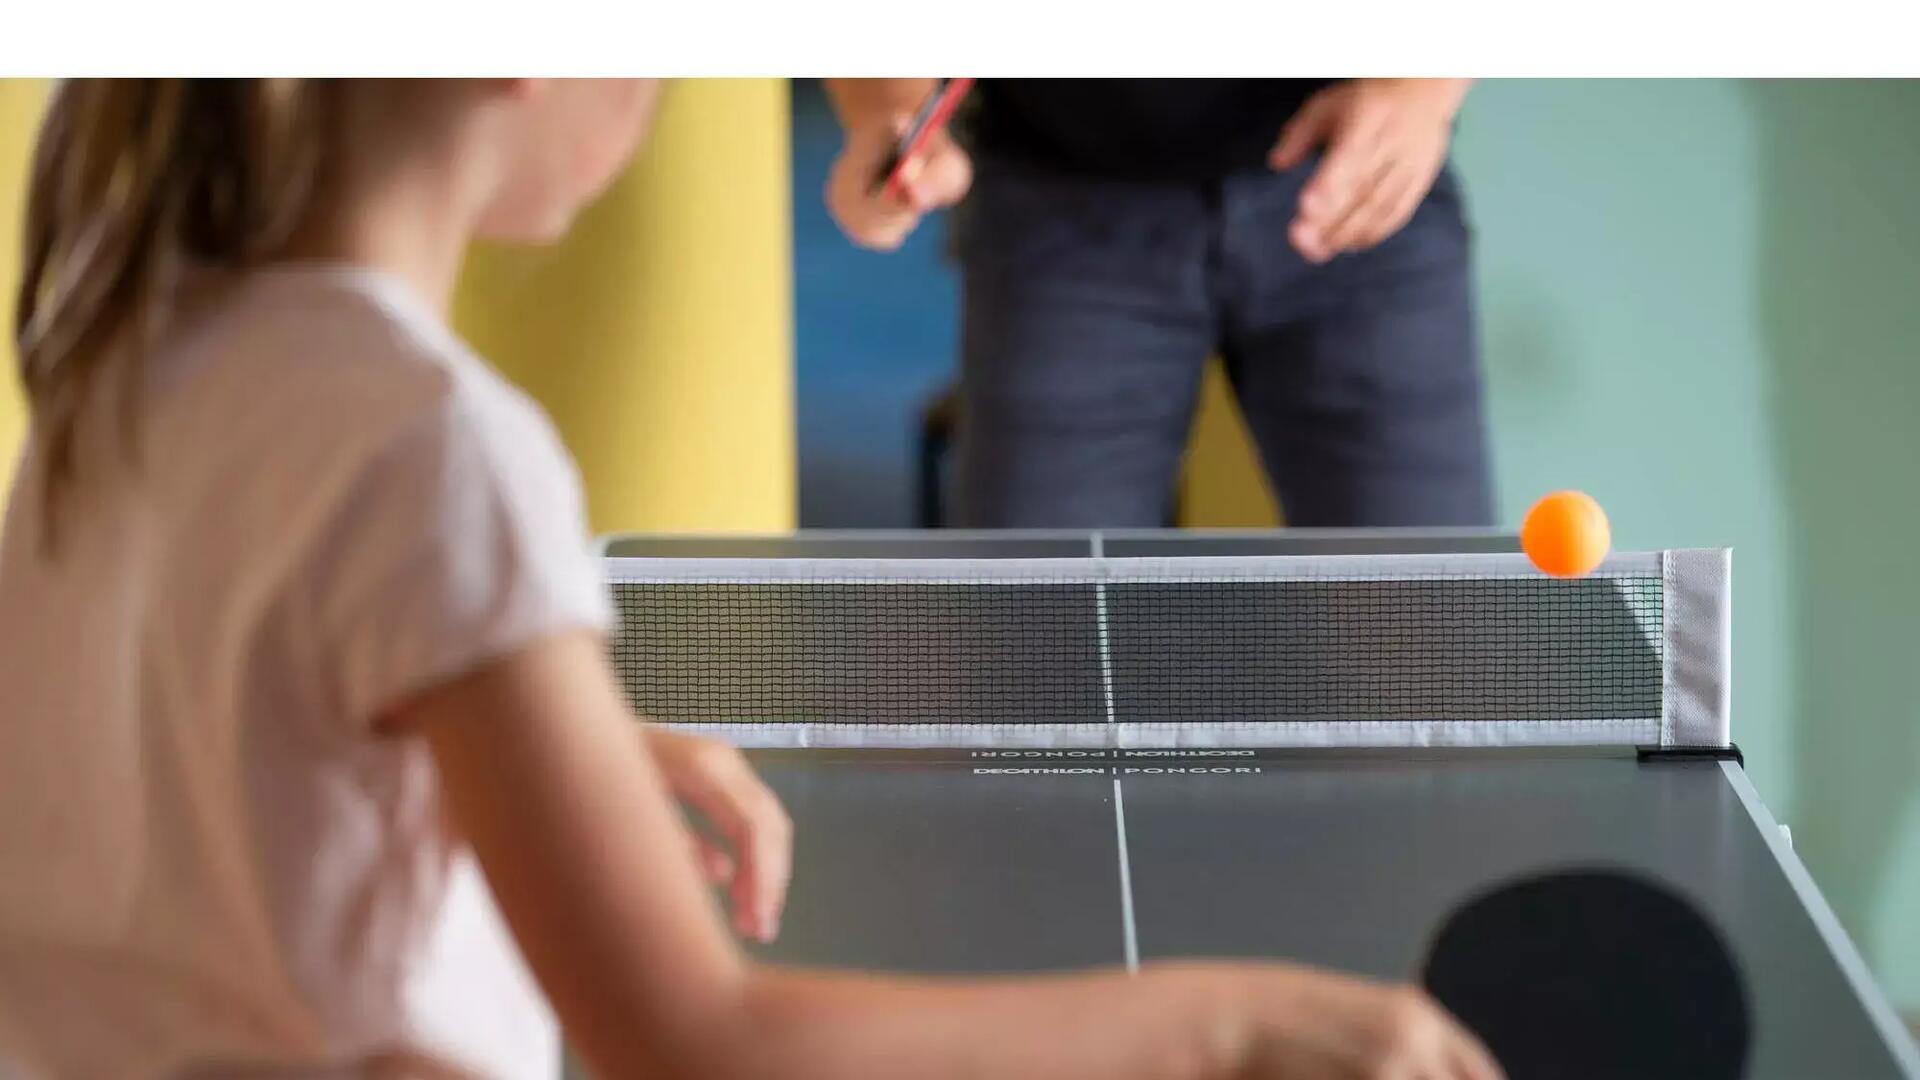 2 people playing ping pong